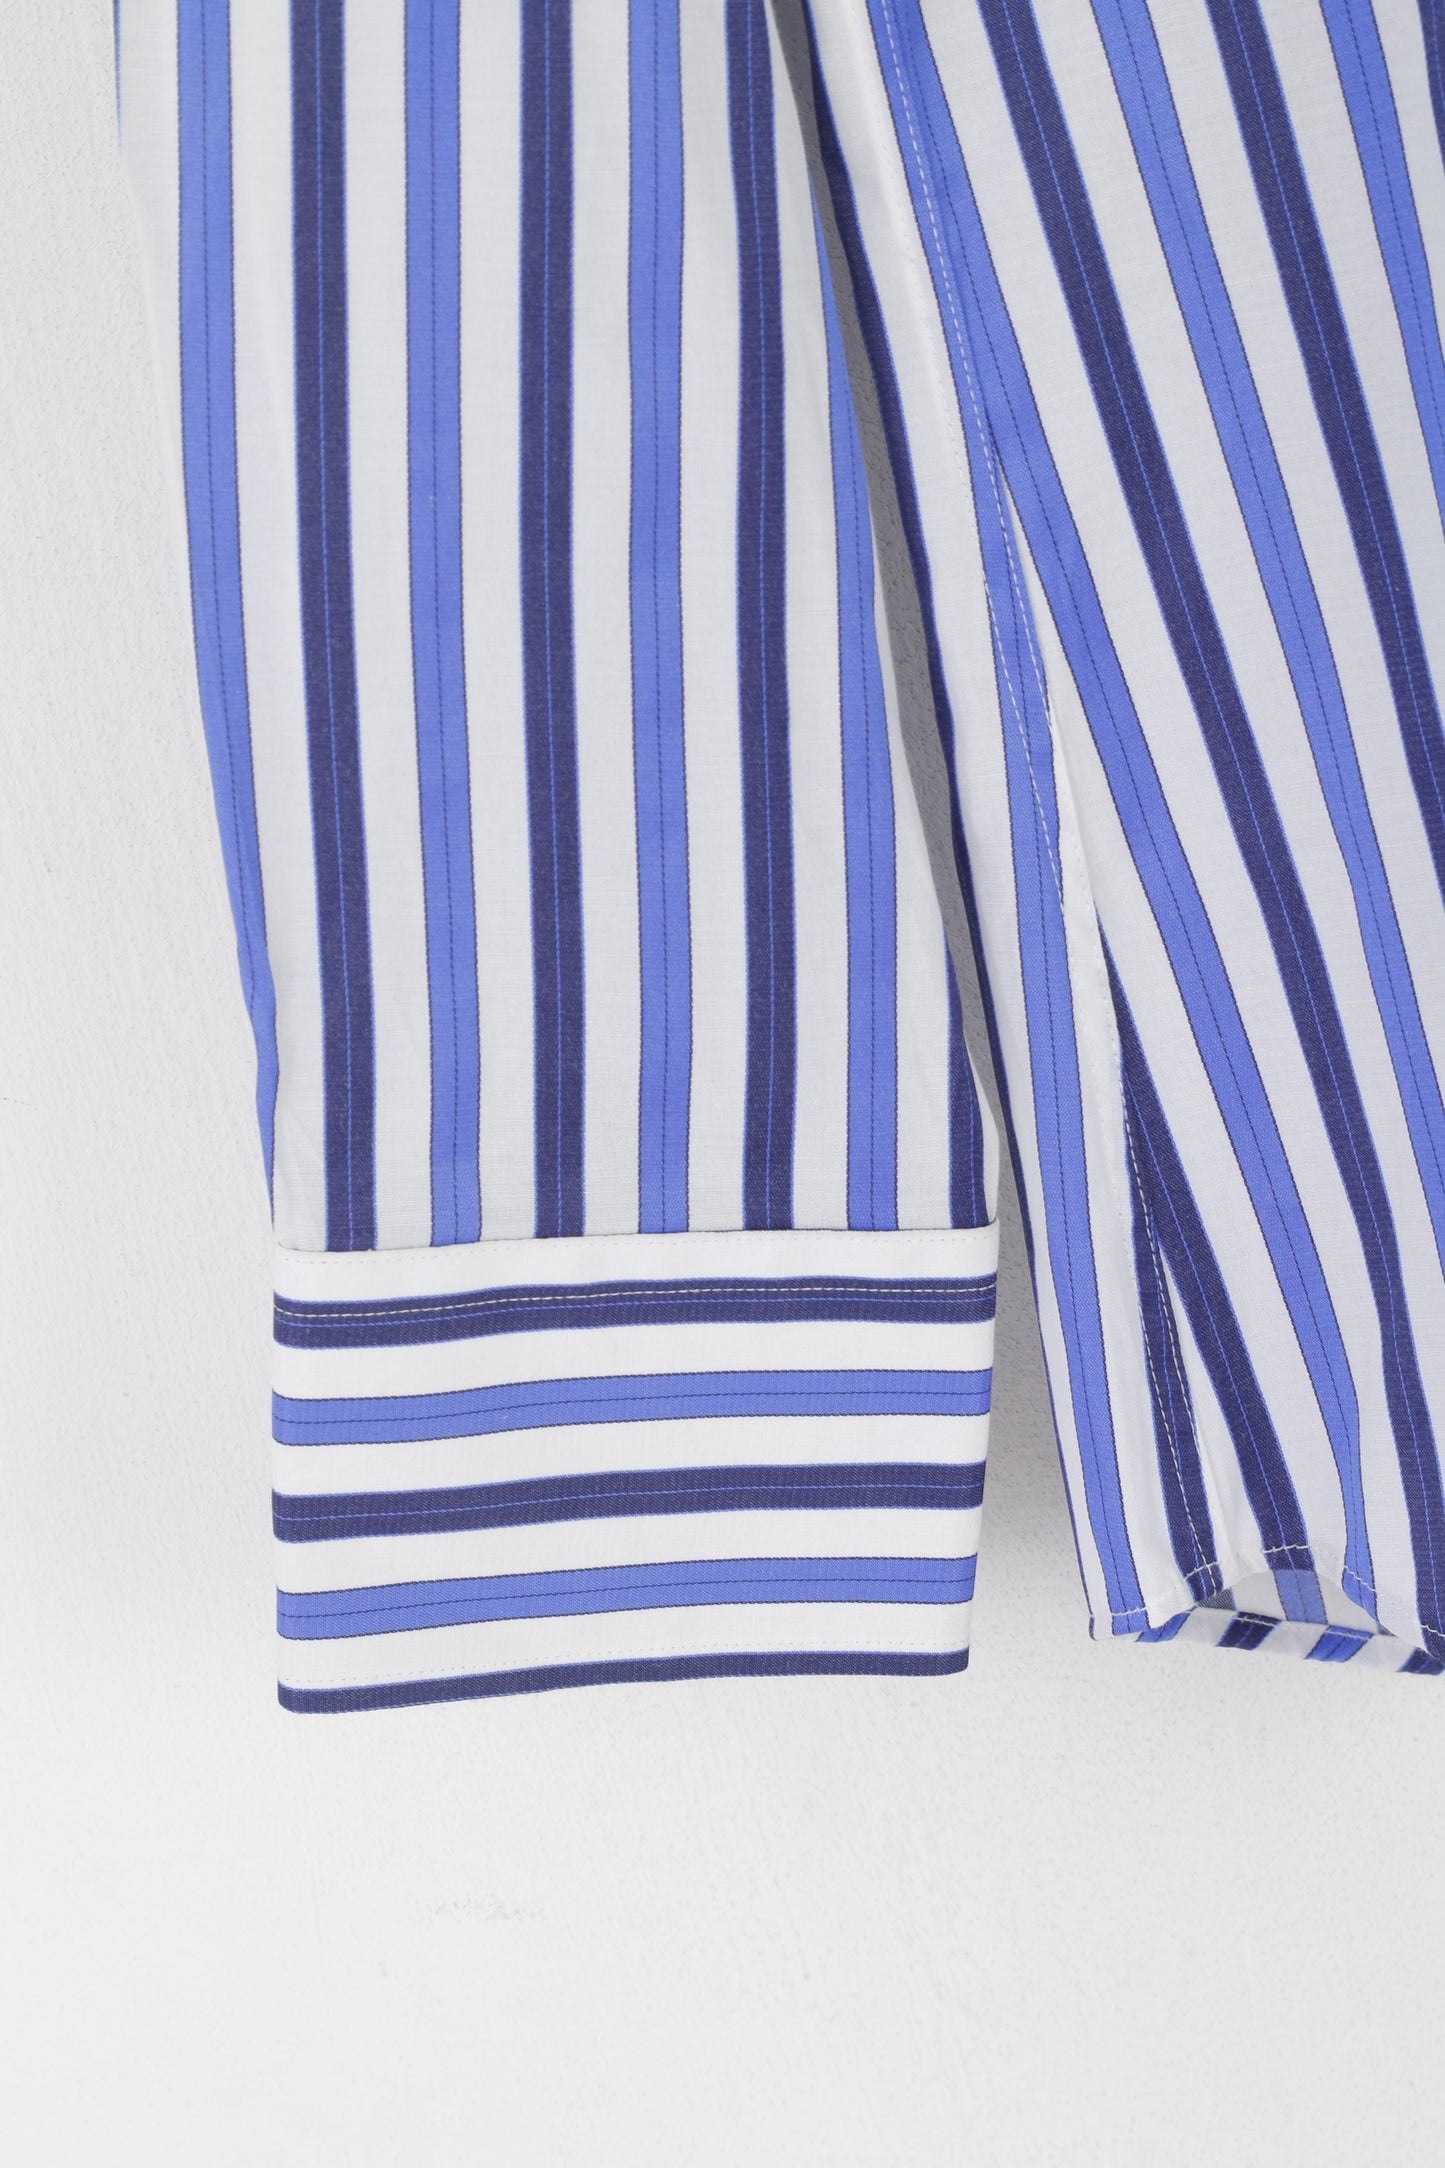 Luigi Batani Men L Casual Shirt Blue Striped Slim Fit Italy Long Sleeve Top